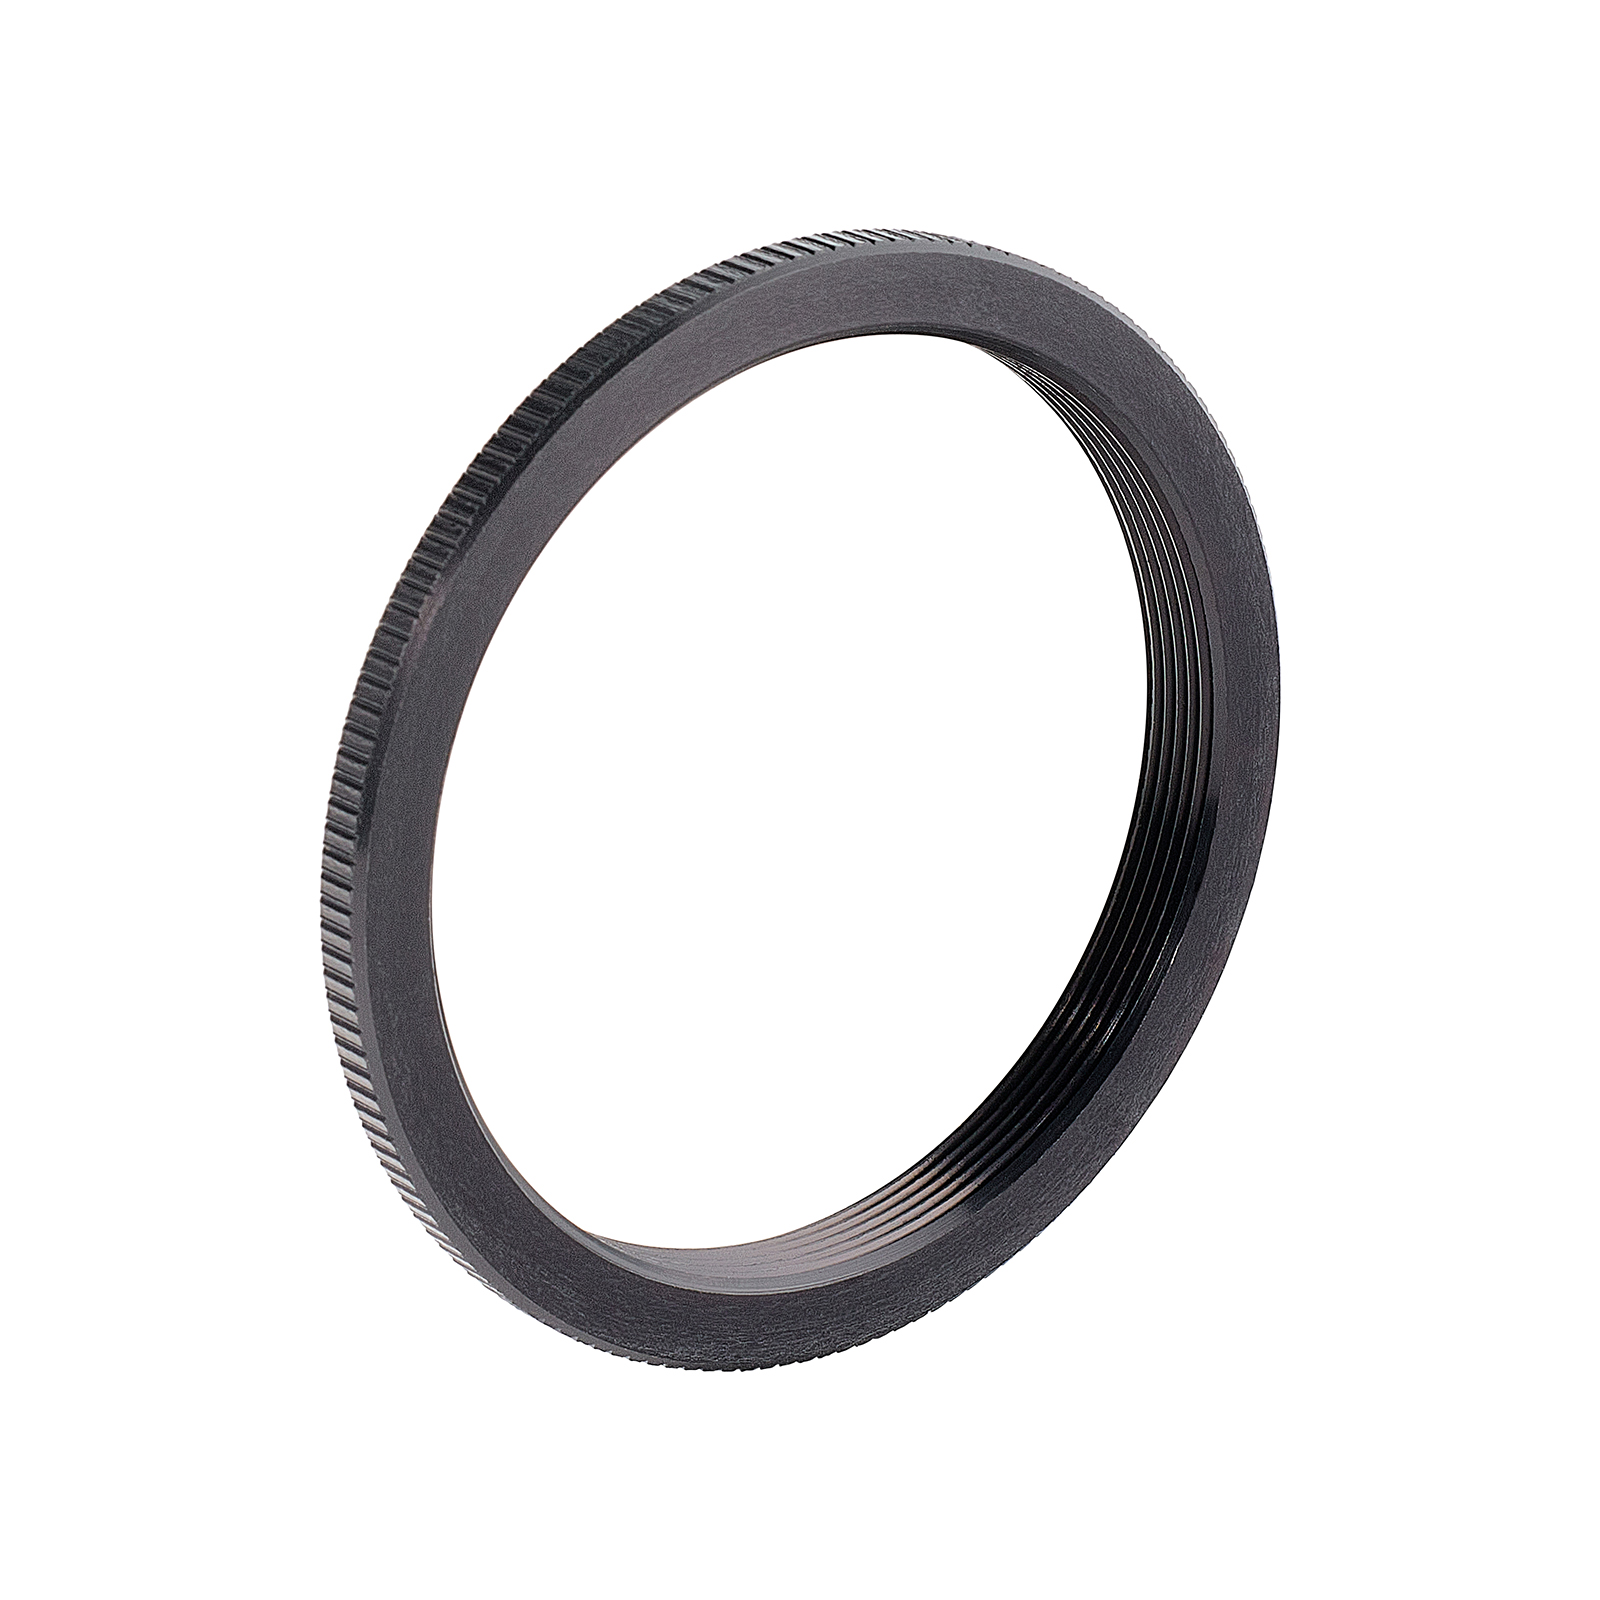 Coronado 40mm Doublestack Adapter Ring